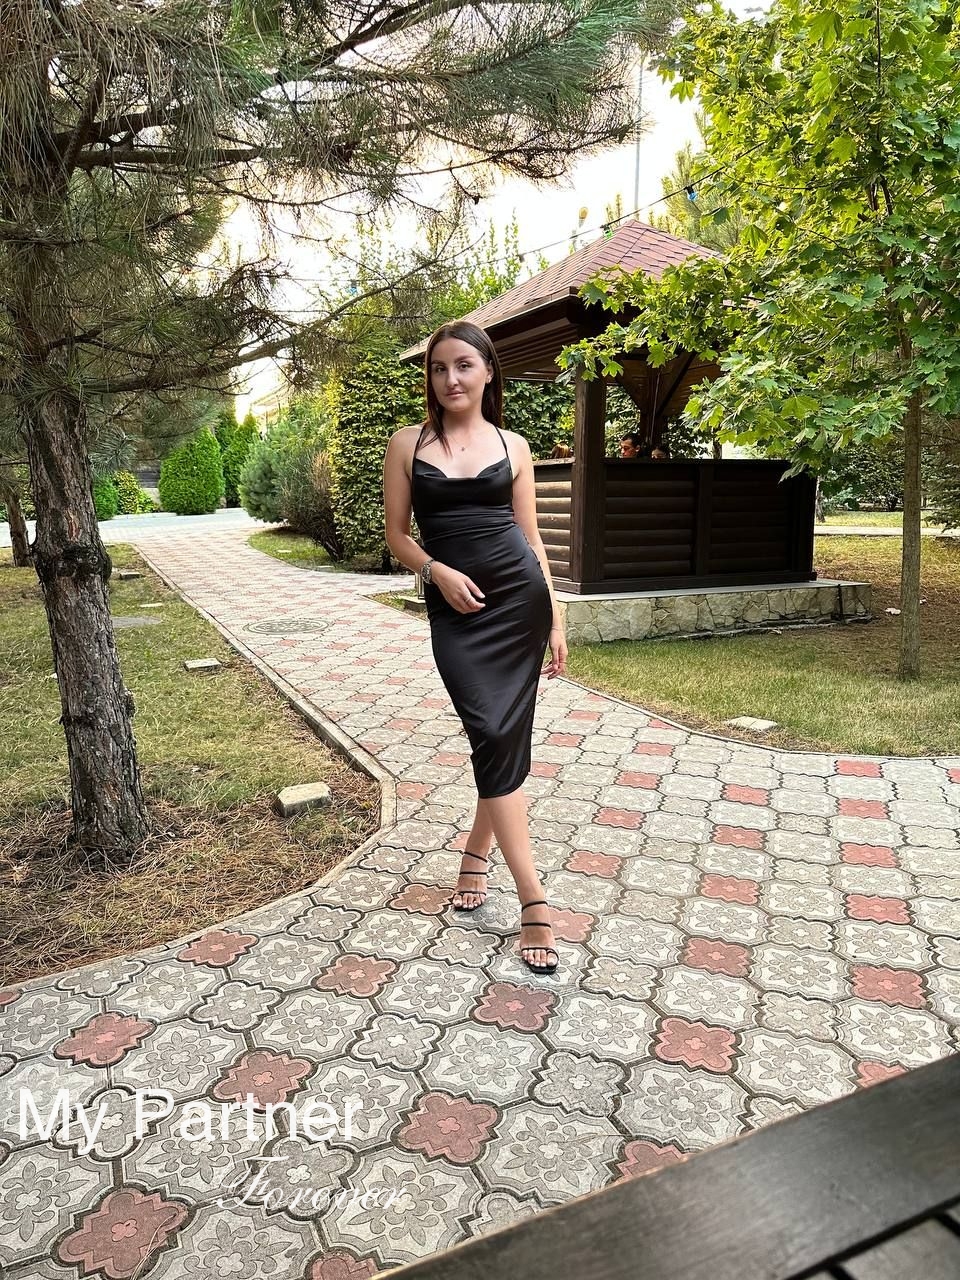 Russian Girl Looking for Men - Anastasiya from Chisinau, Moldova